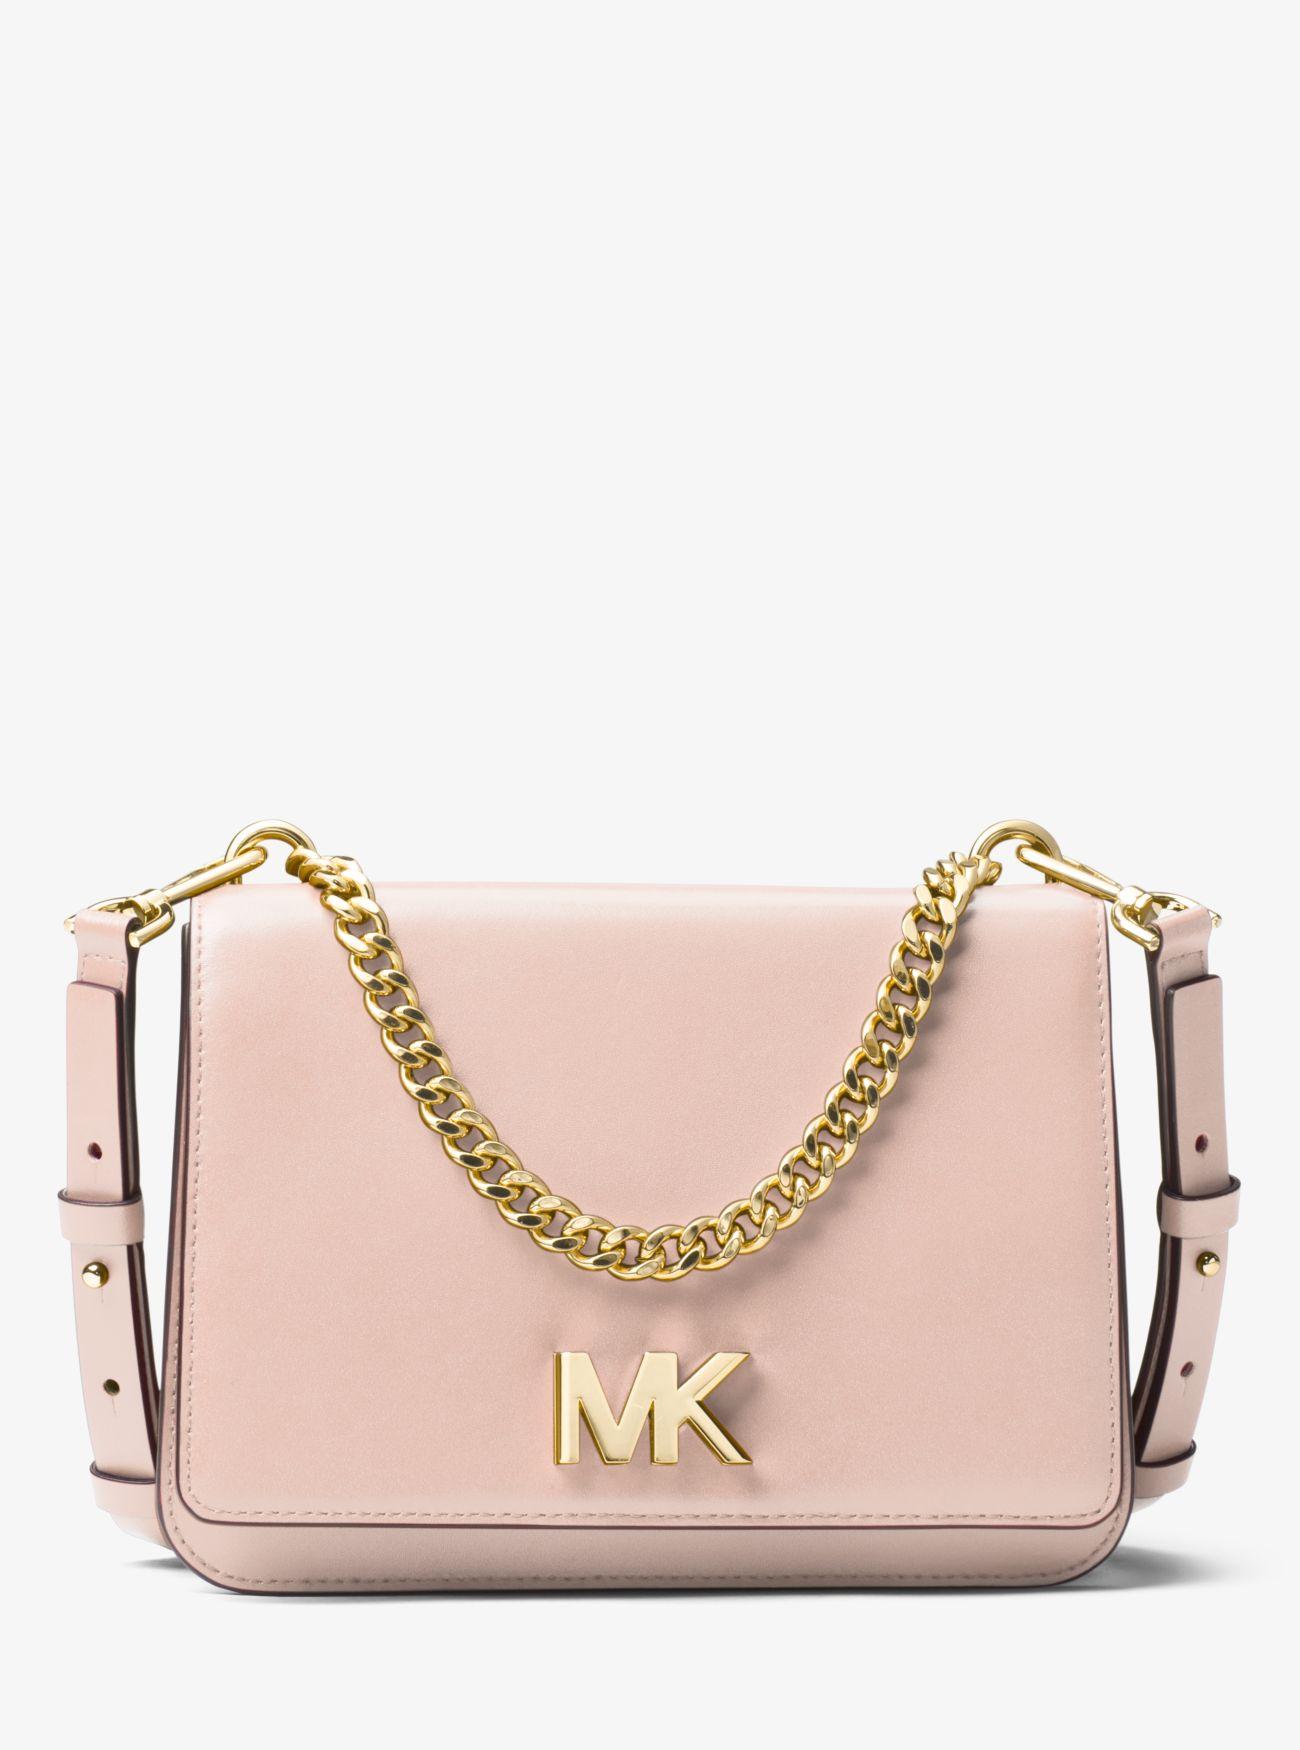 MICHAEL Michael Kors Mott Leather Crossbody Bag in Soft Pink (Pink) - Lyst